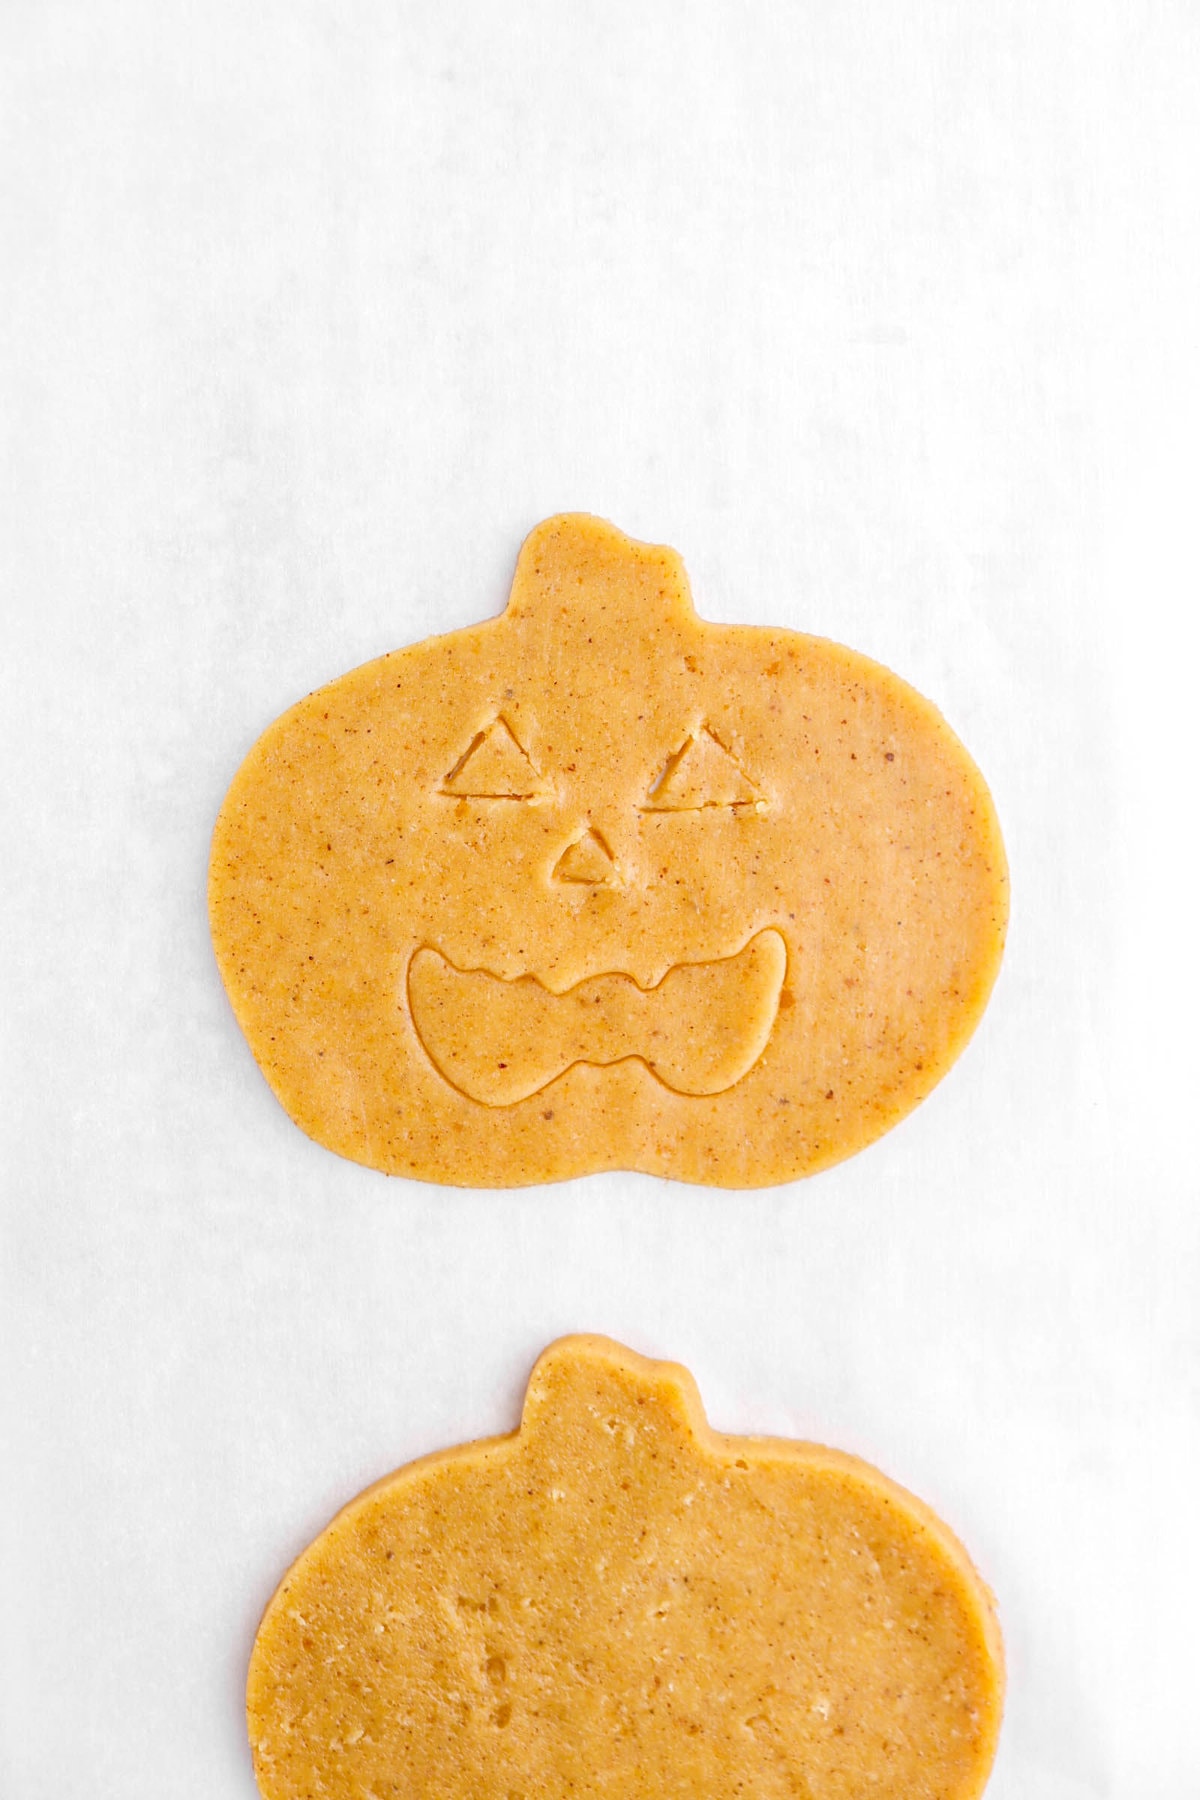 face cut into pumpkin shaped cookie dough.